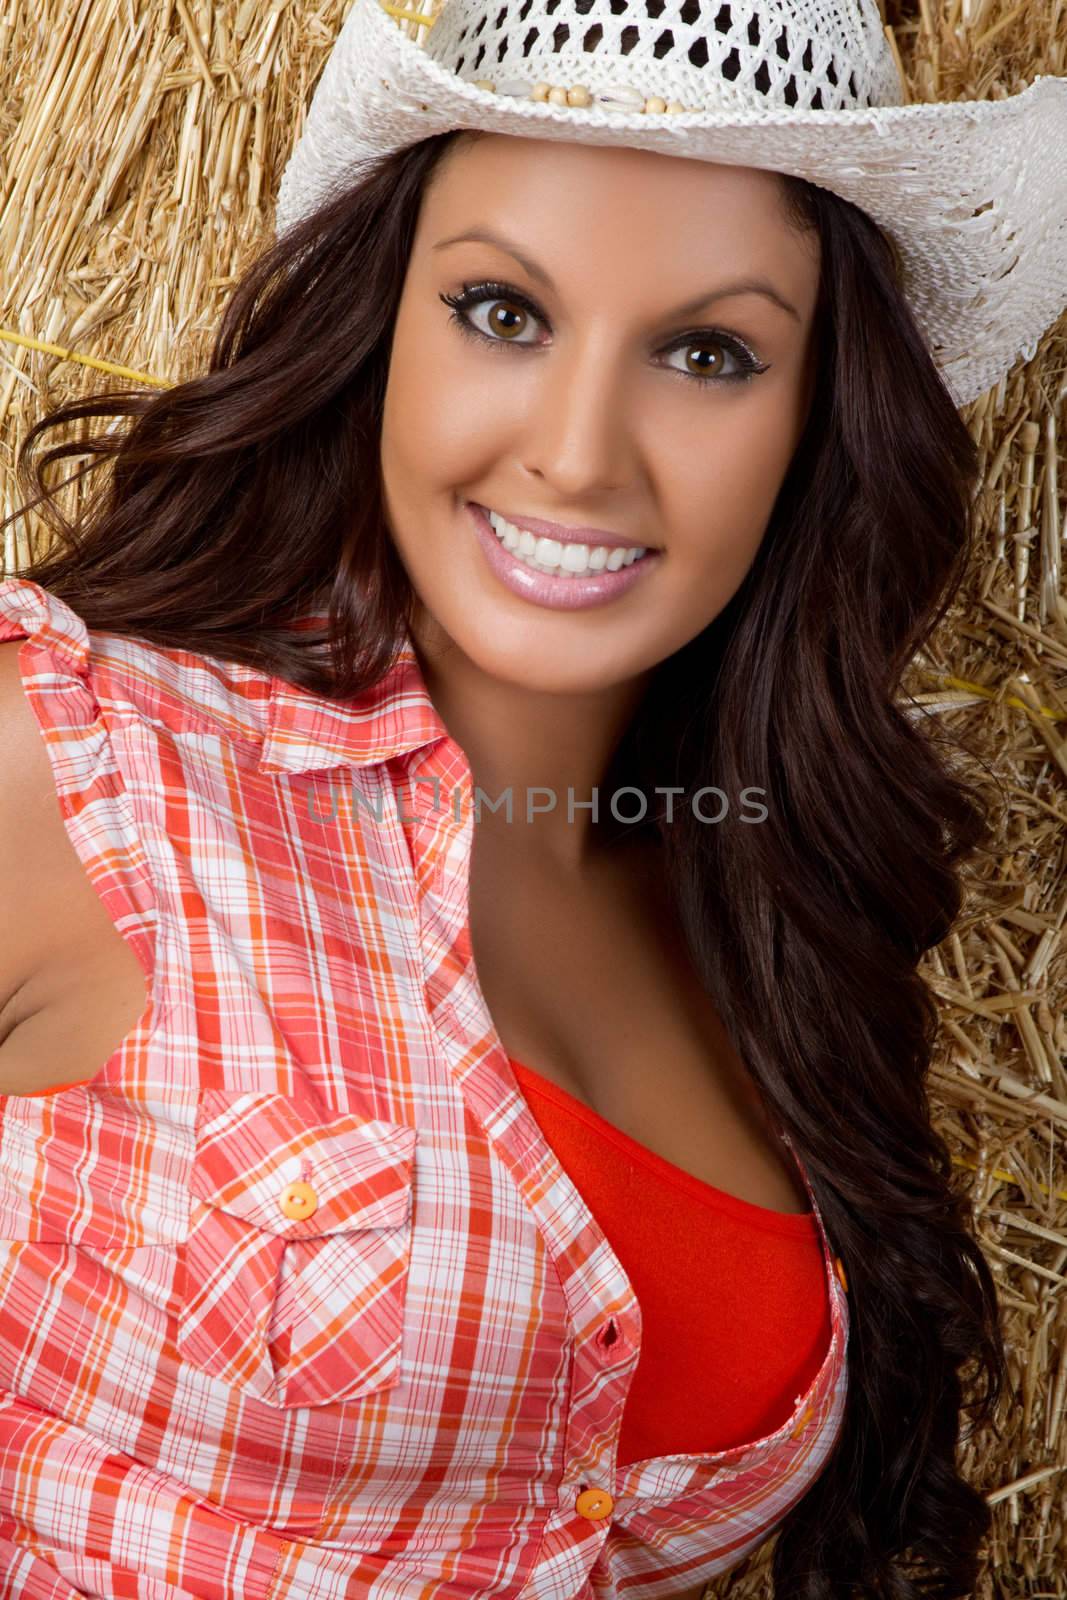 Beautiful country girl wearing hat